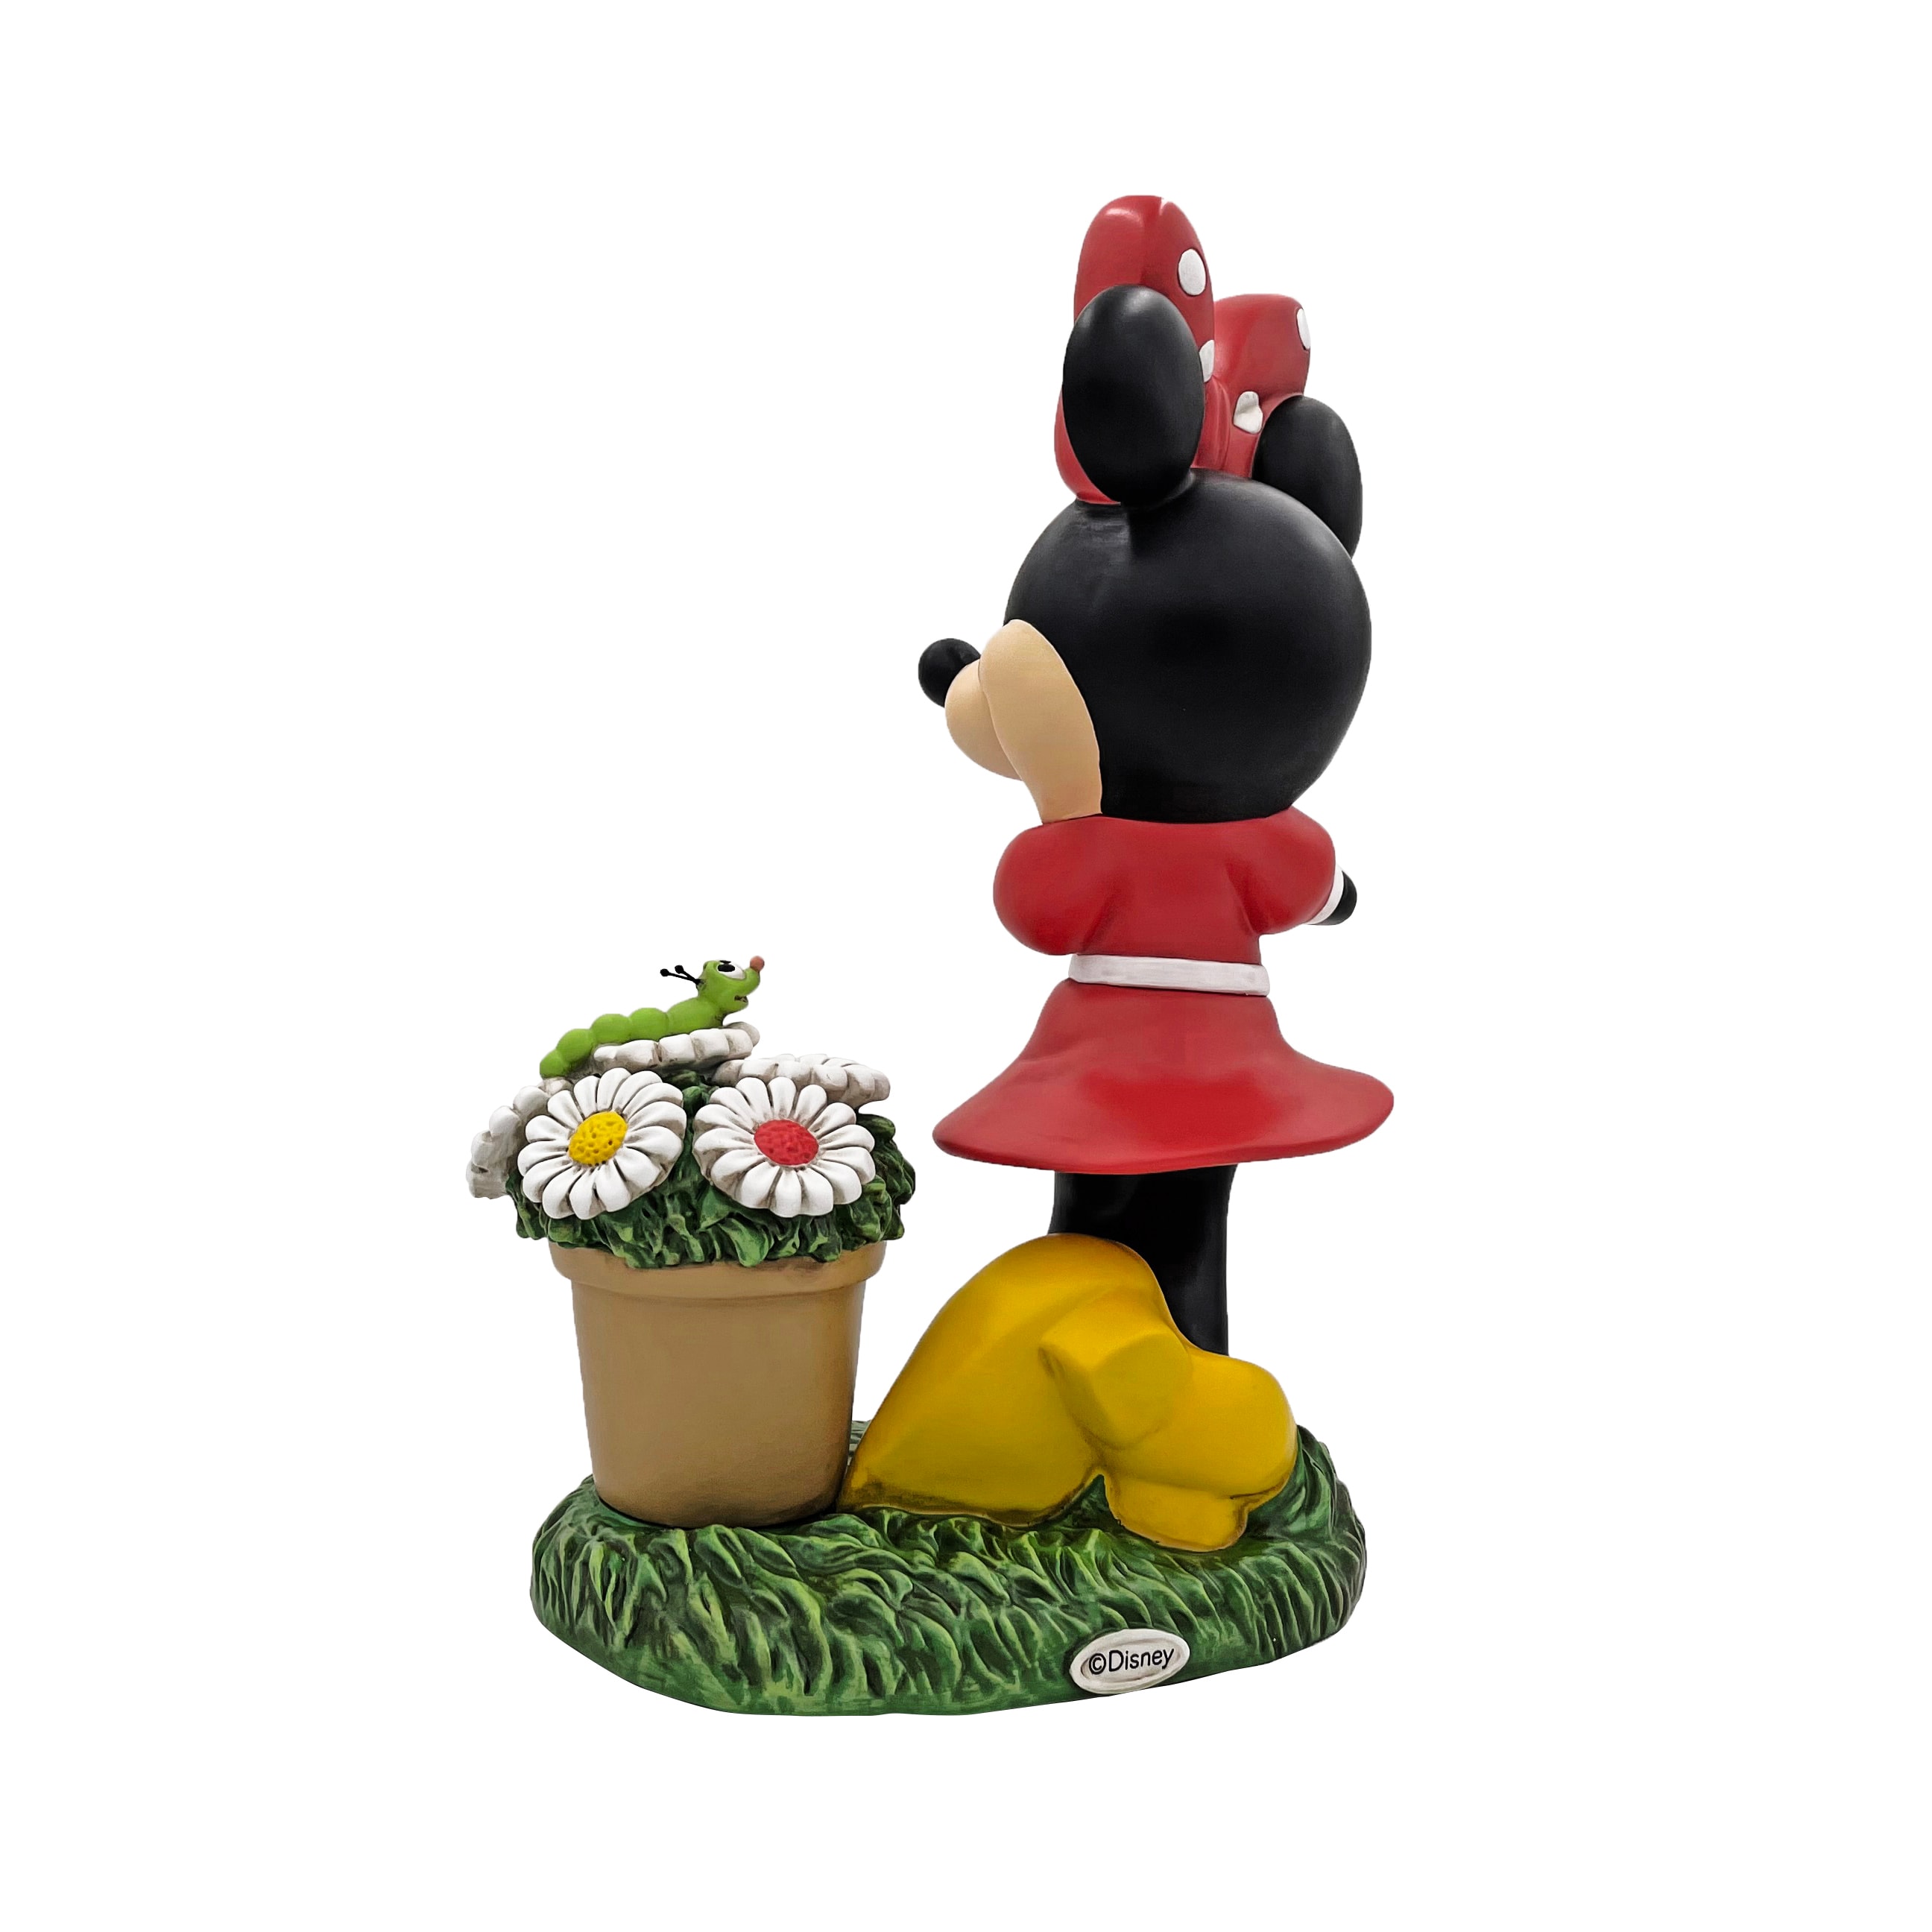 GARDEN MINIATURE Stake Disney Mickey Minnie Mouse Pot Plant Stakes Welcome 2 